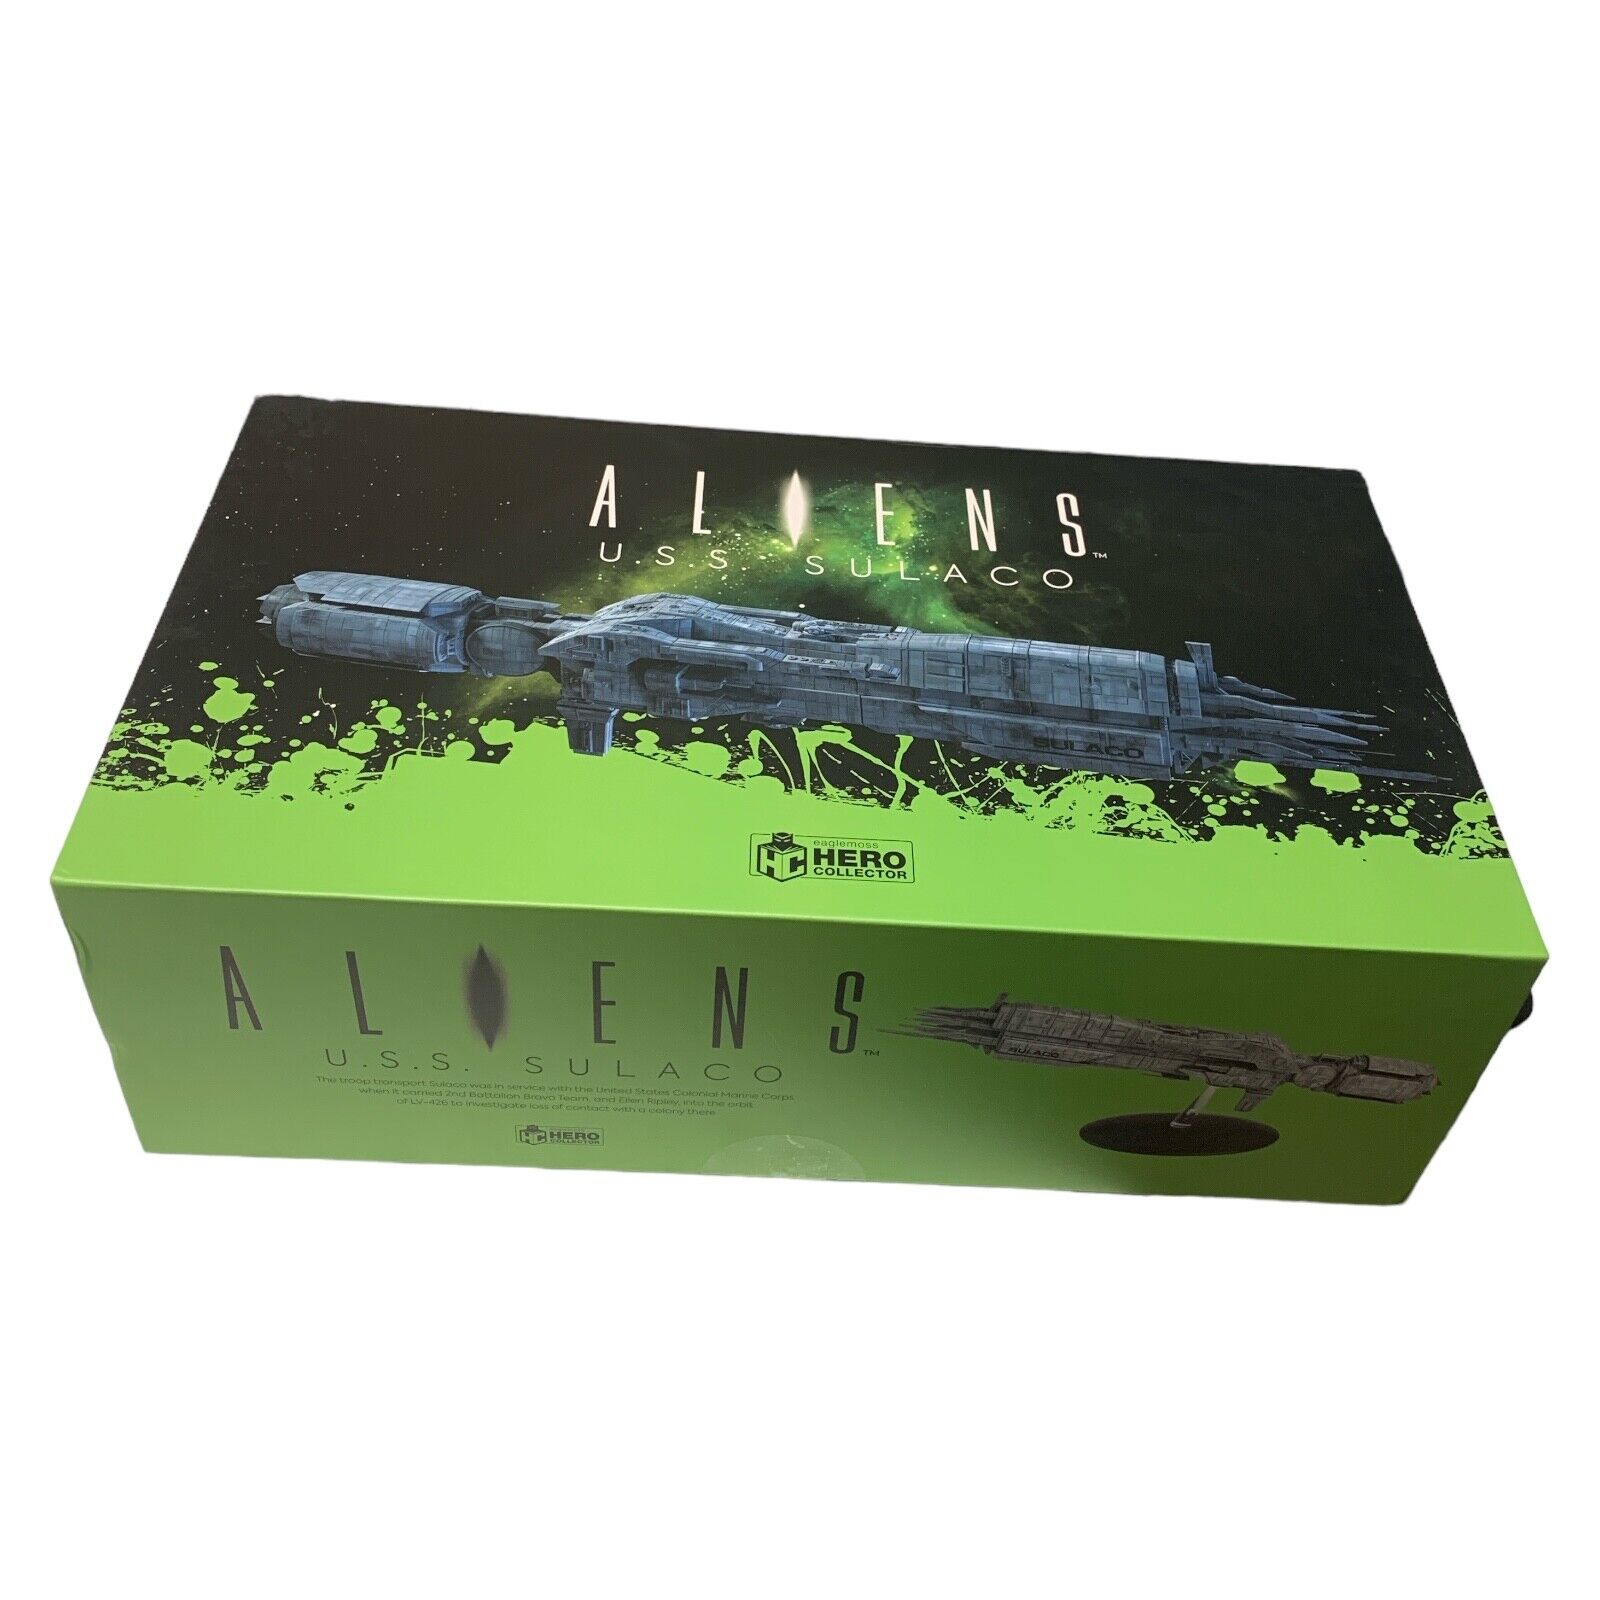 Sulaco Alien. XL Die Cast ship Eaglemoss new in box special offer